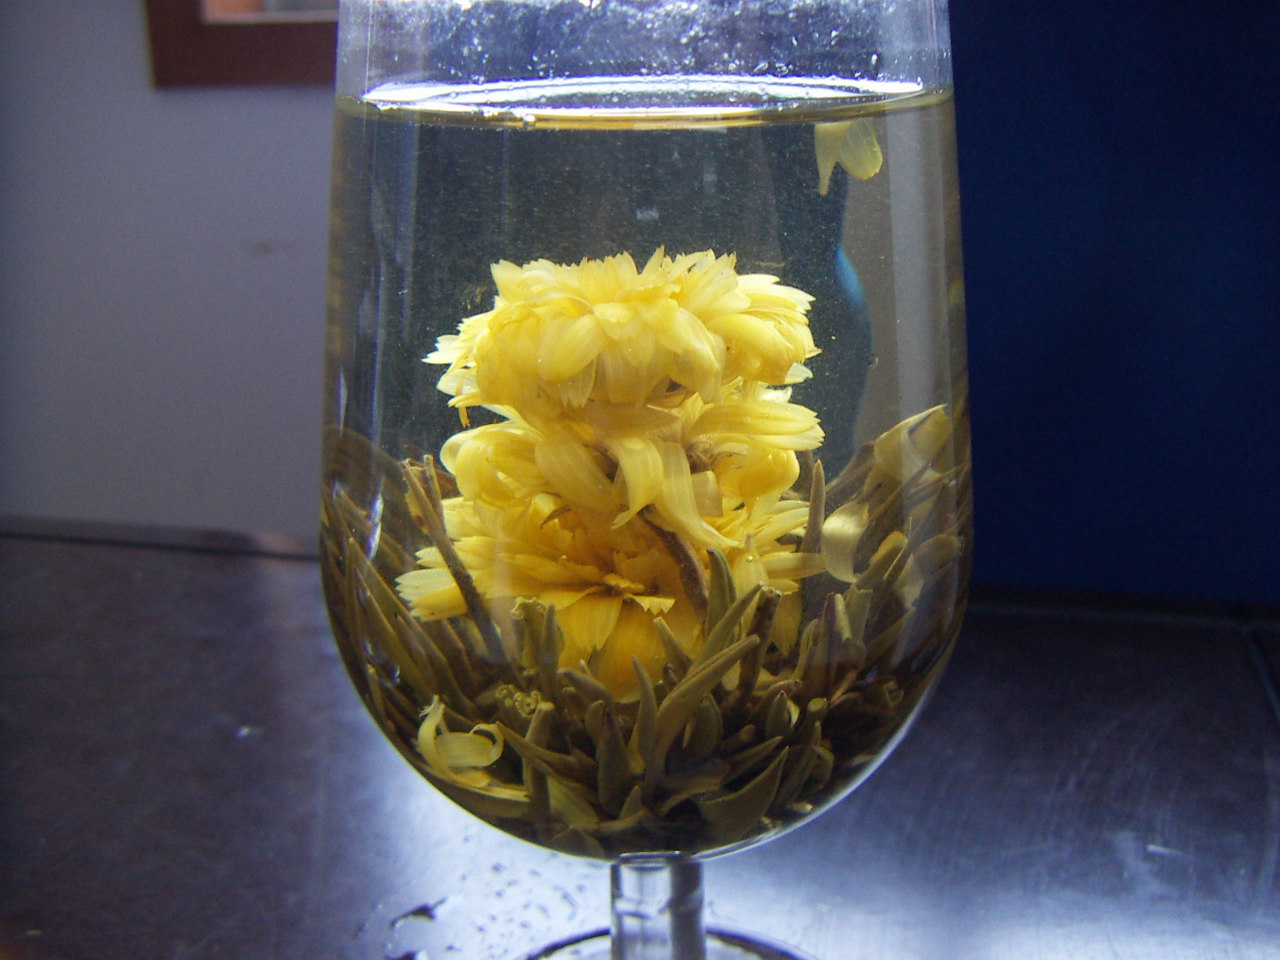 flower teas importers,flower teas buyers,flower teas importer,buy flower teas,flower teas buyer,import flower teas